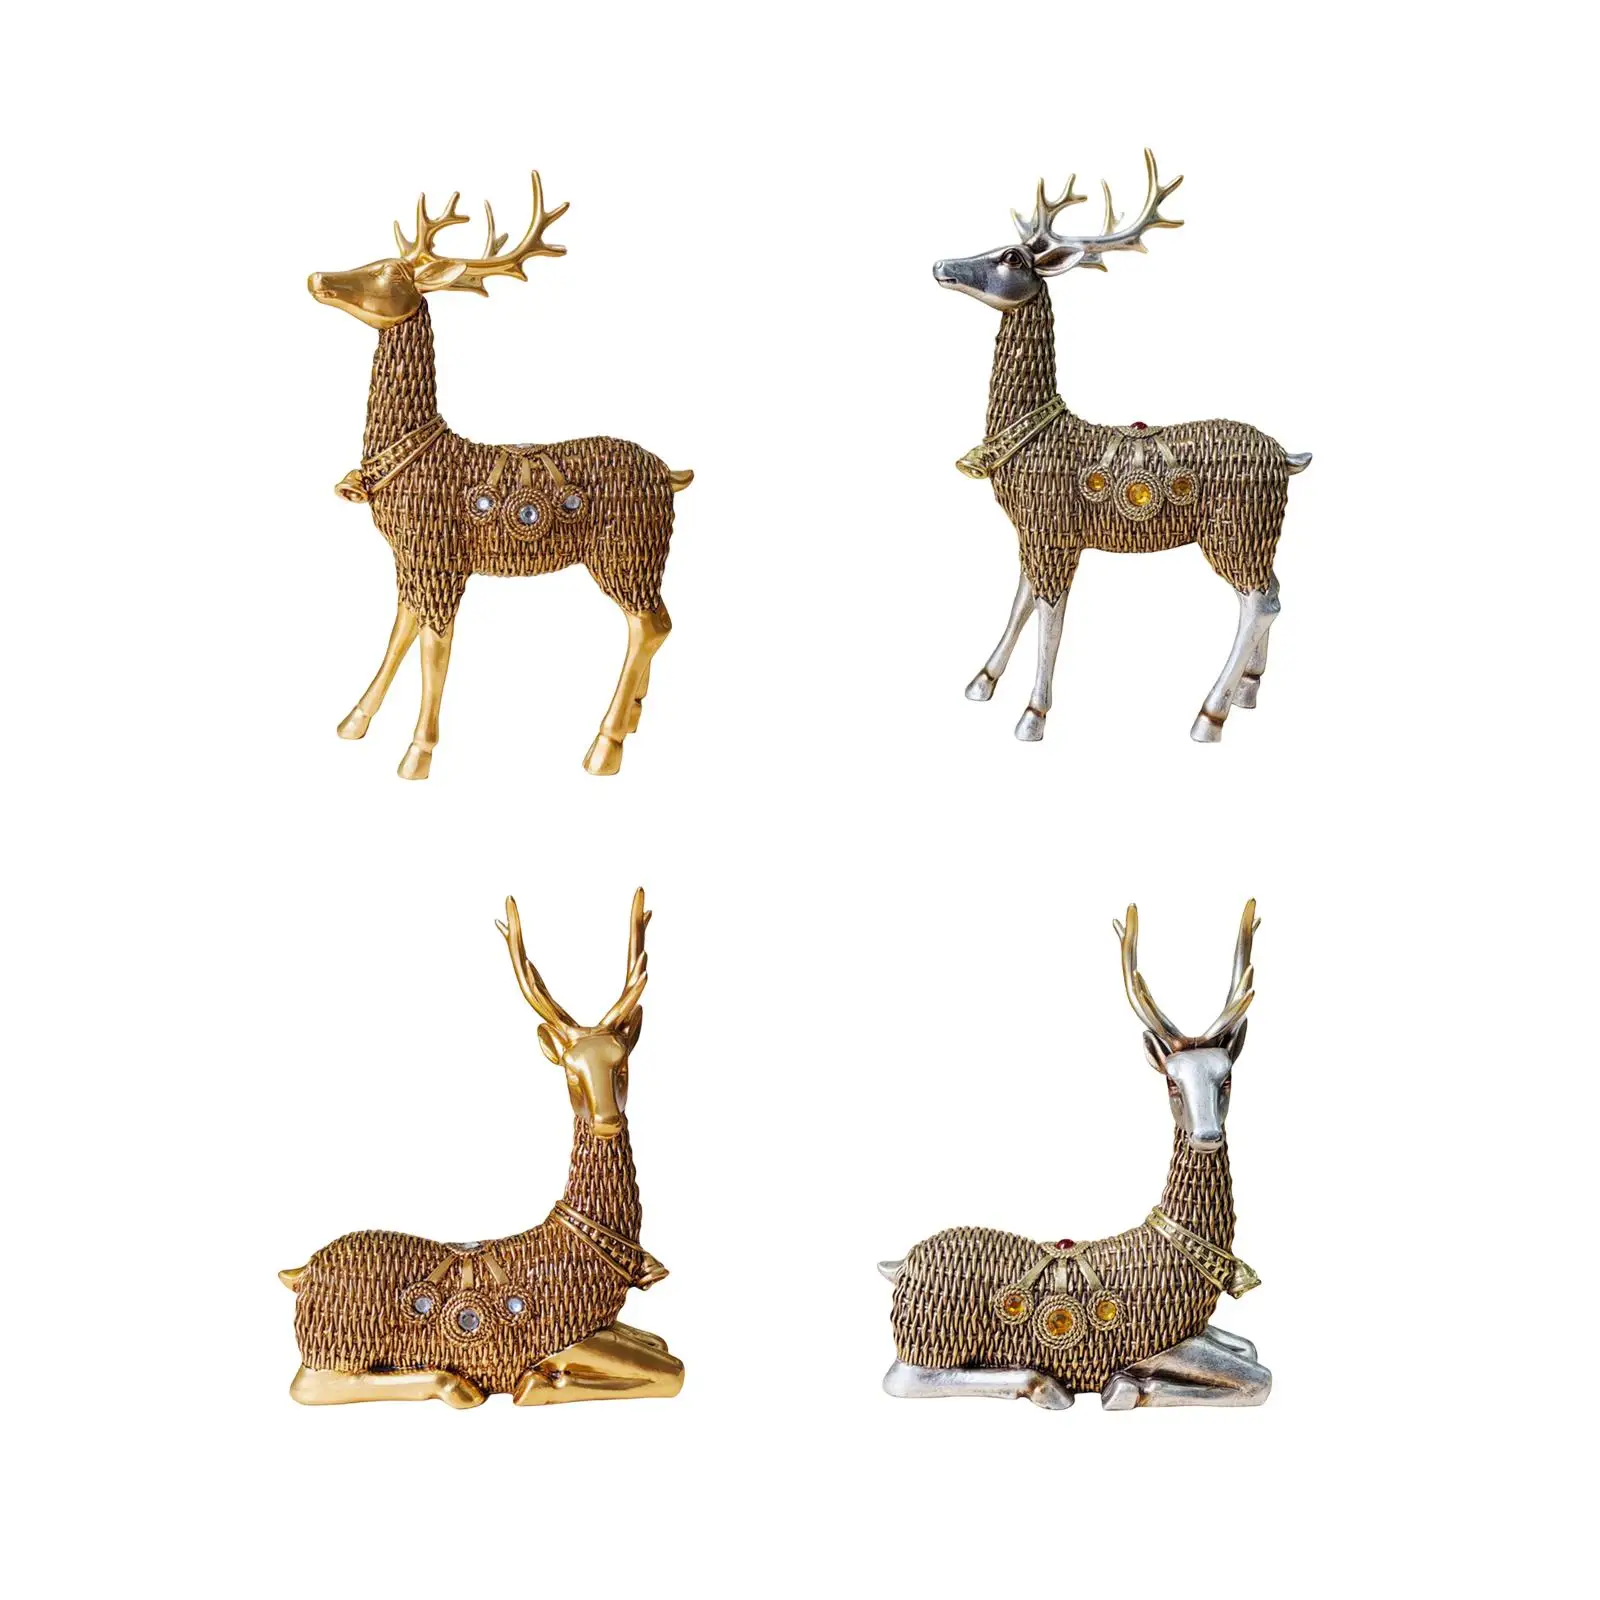 

Reindeer Figurines Resin Deer Statues Animal Sculpture Ornaments Deer Sculptures for Office Home Desktop Bookshelf Decoration